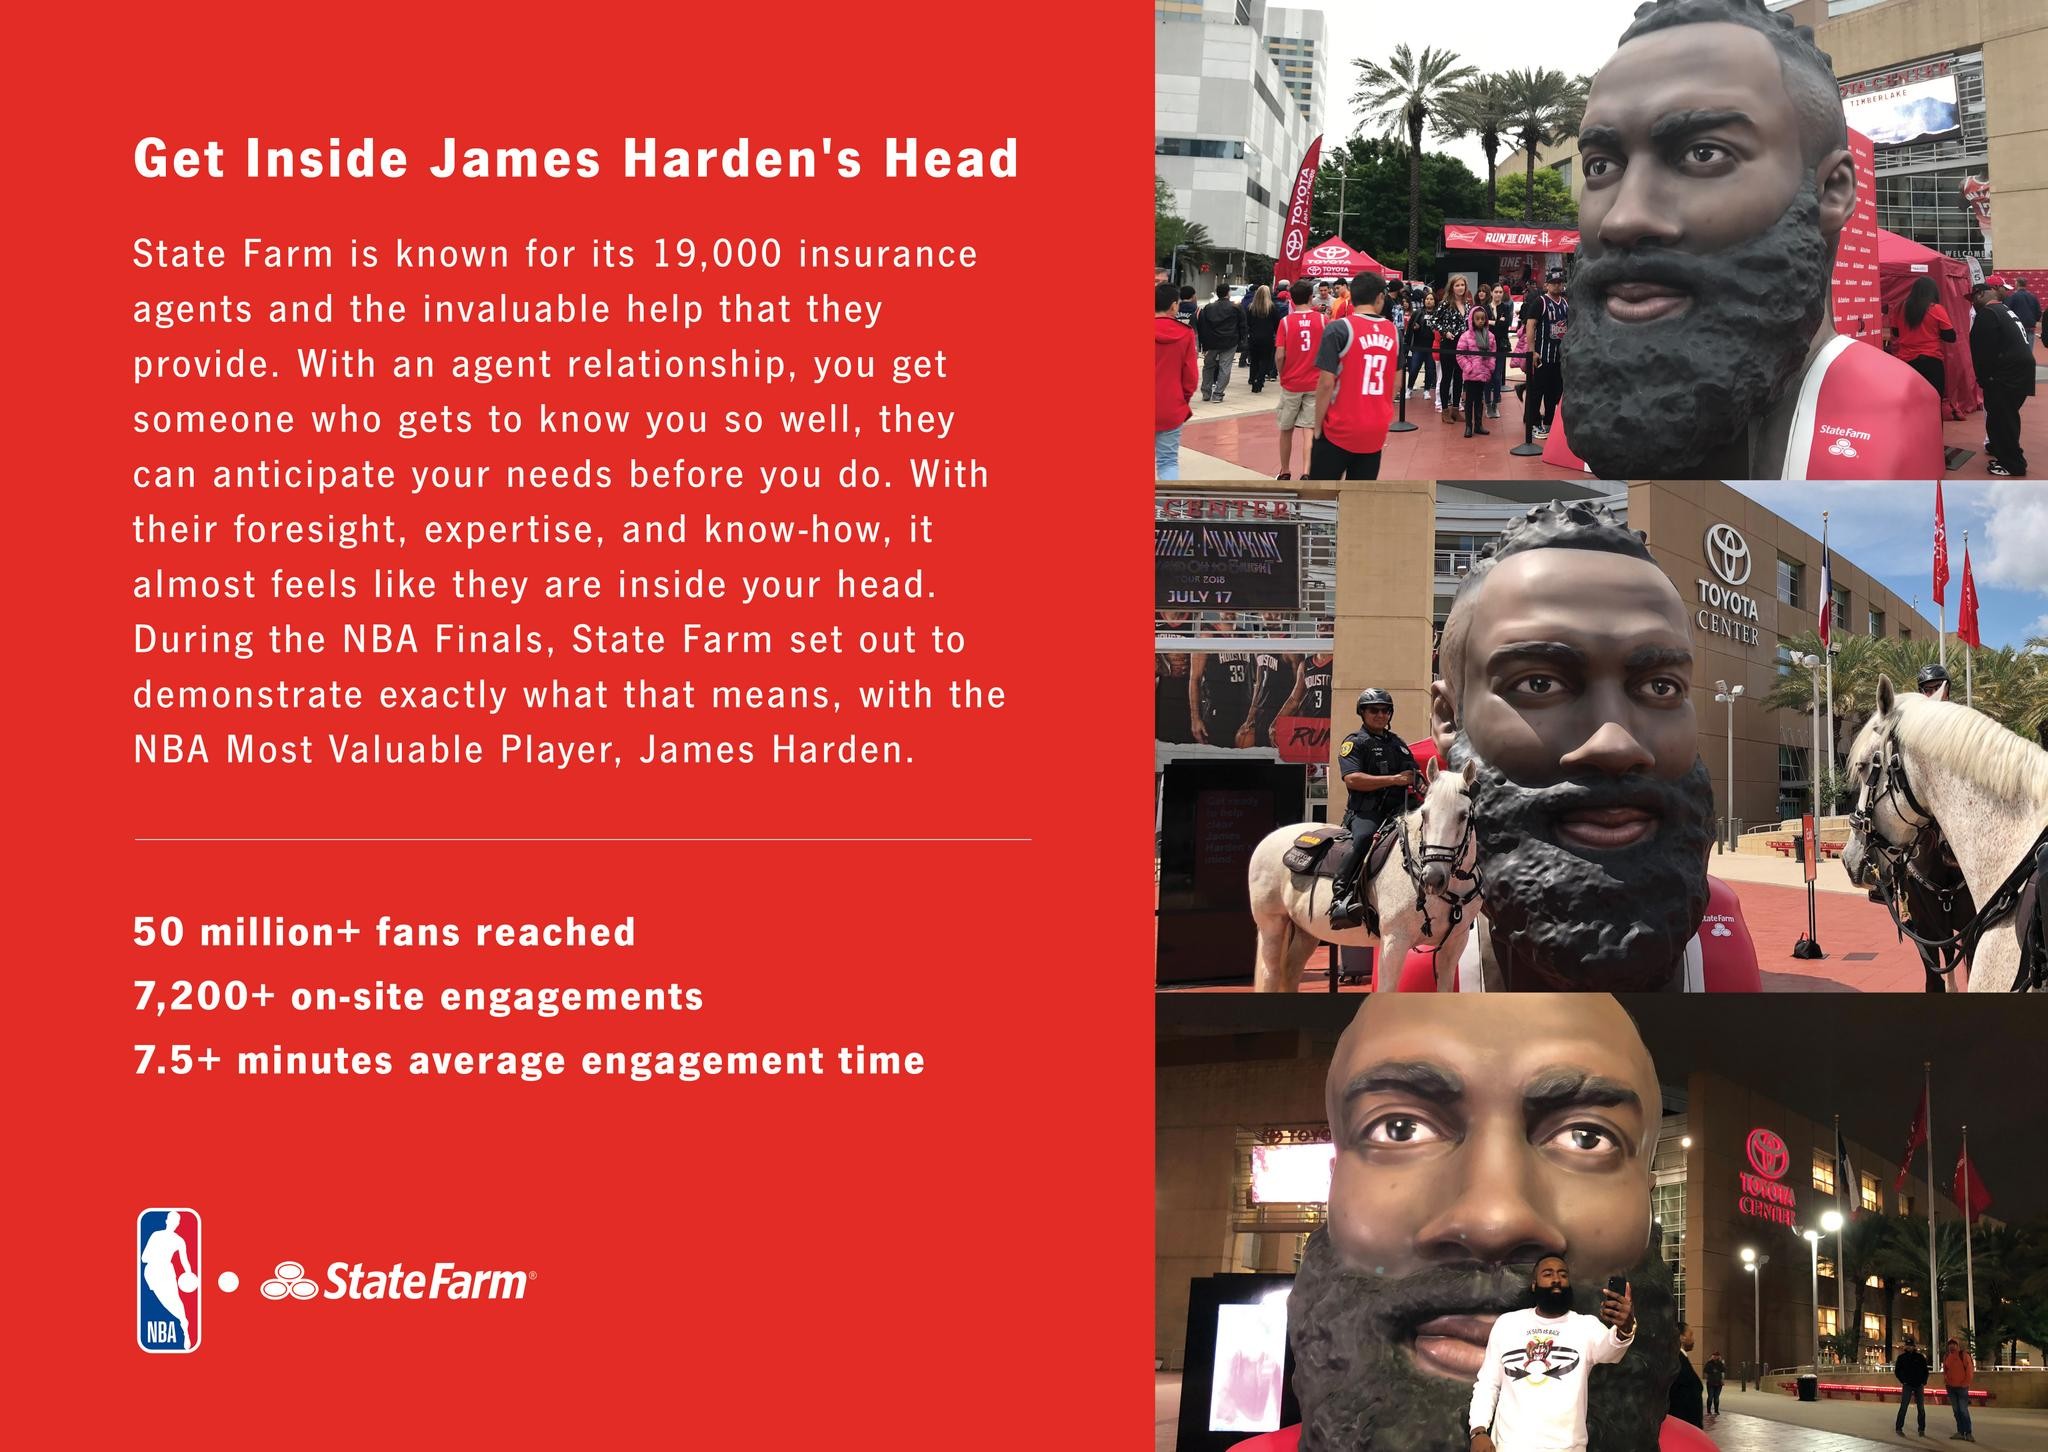 Get Inside James Harden's Head